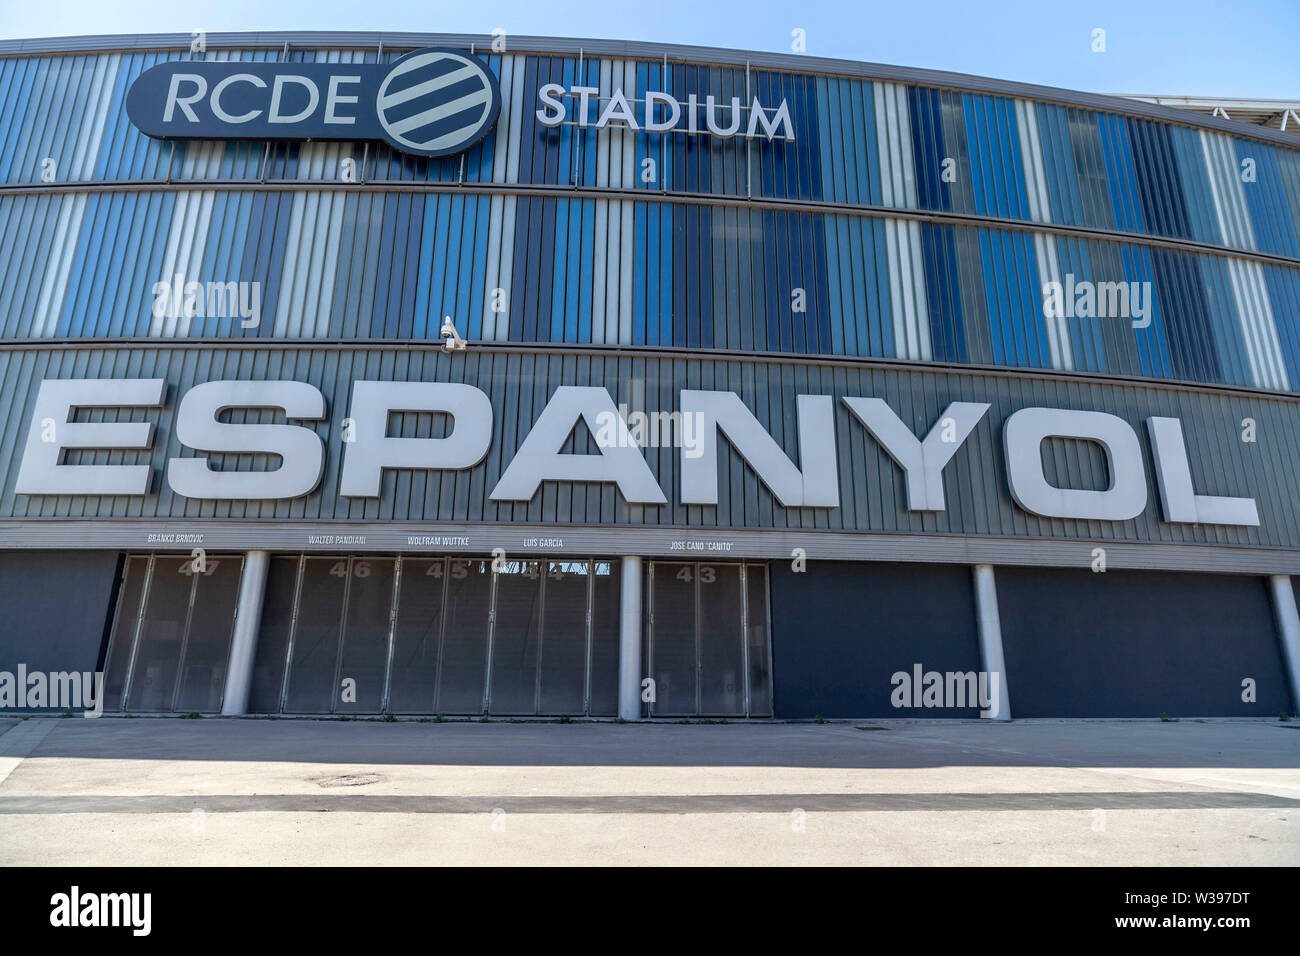 Cornella de Llobregat,Spain Football stadium RCDE Stadium, team  RCDE Espanyol. Stock Photo